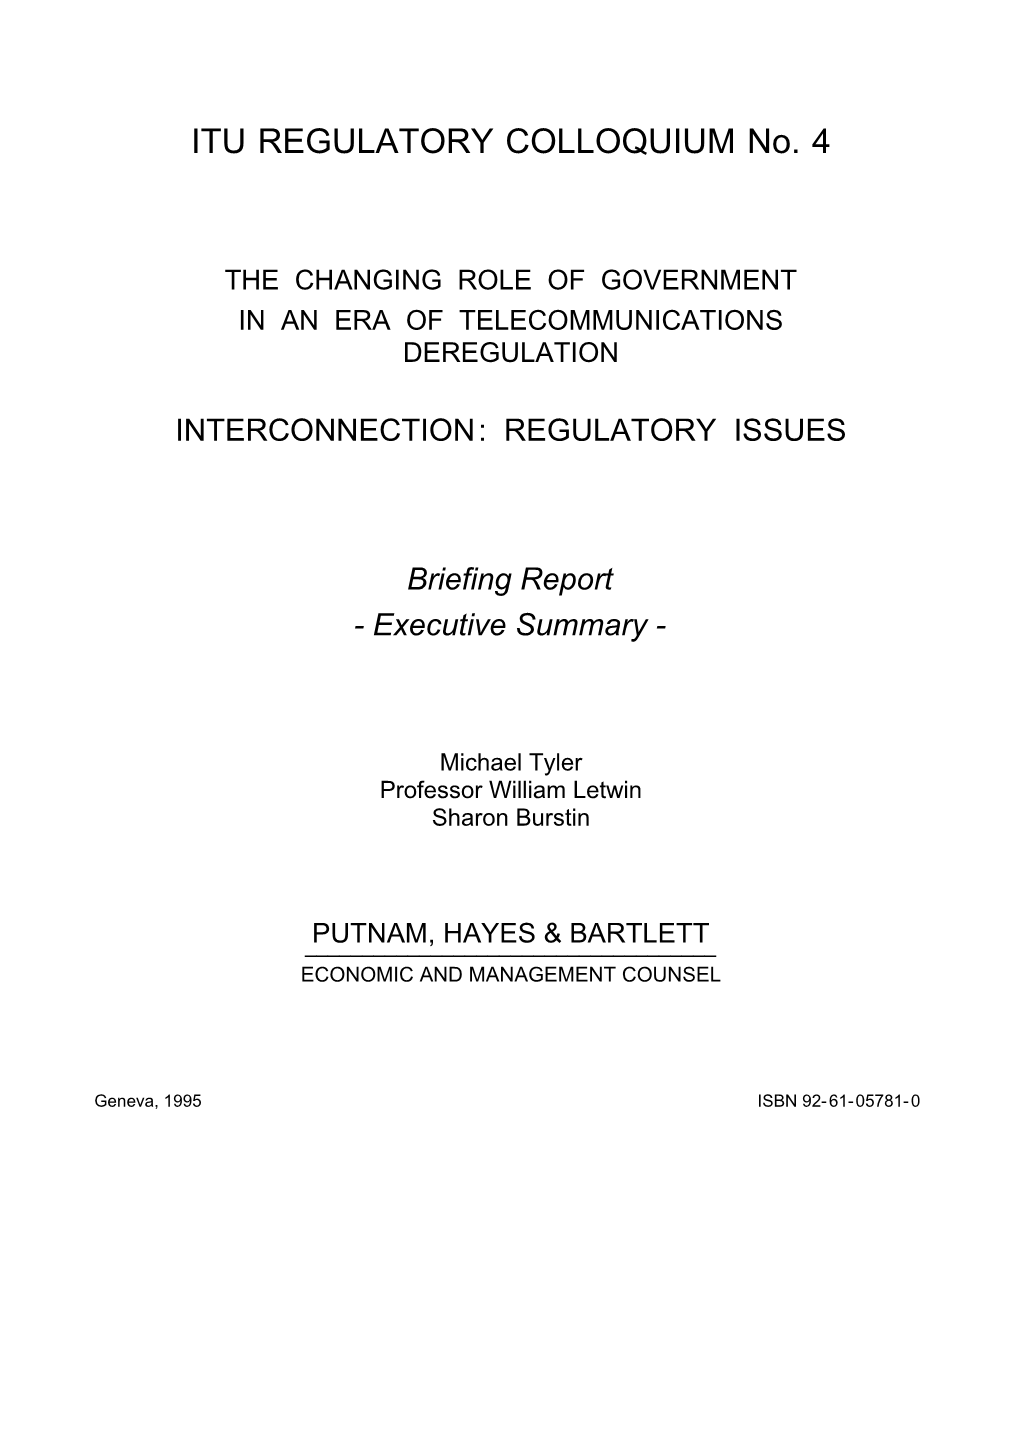 Interconnection : Regulatory Issues